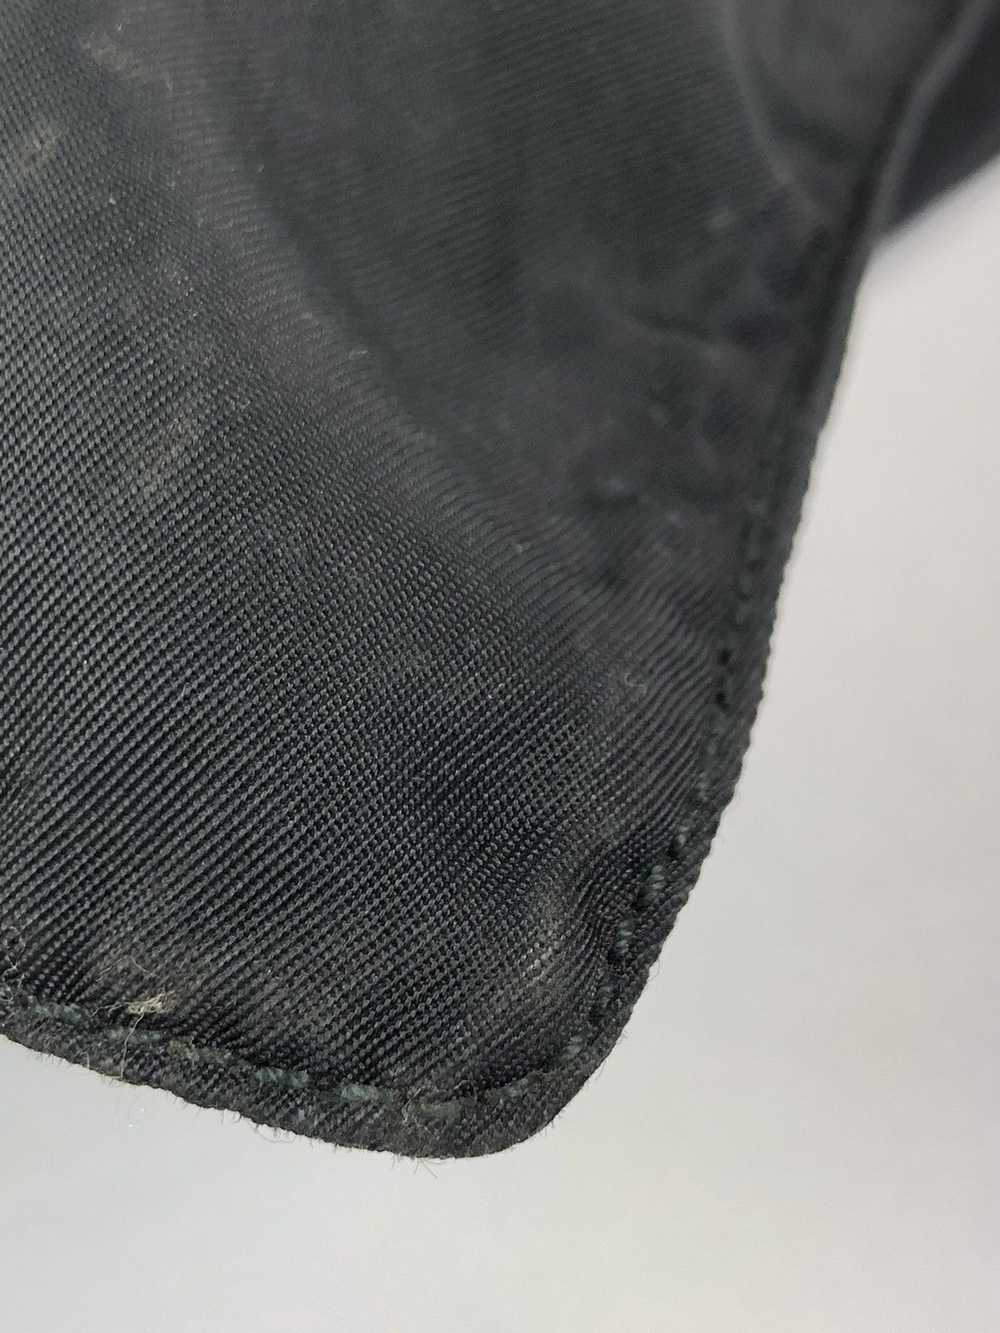 Prada Prada tessuto nero nylon crossbody bag - image 8